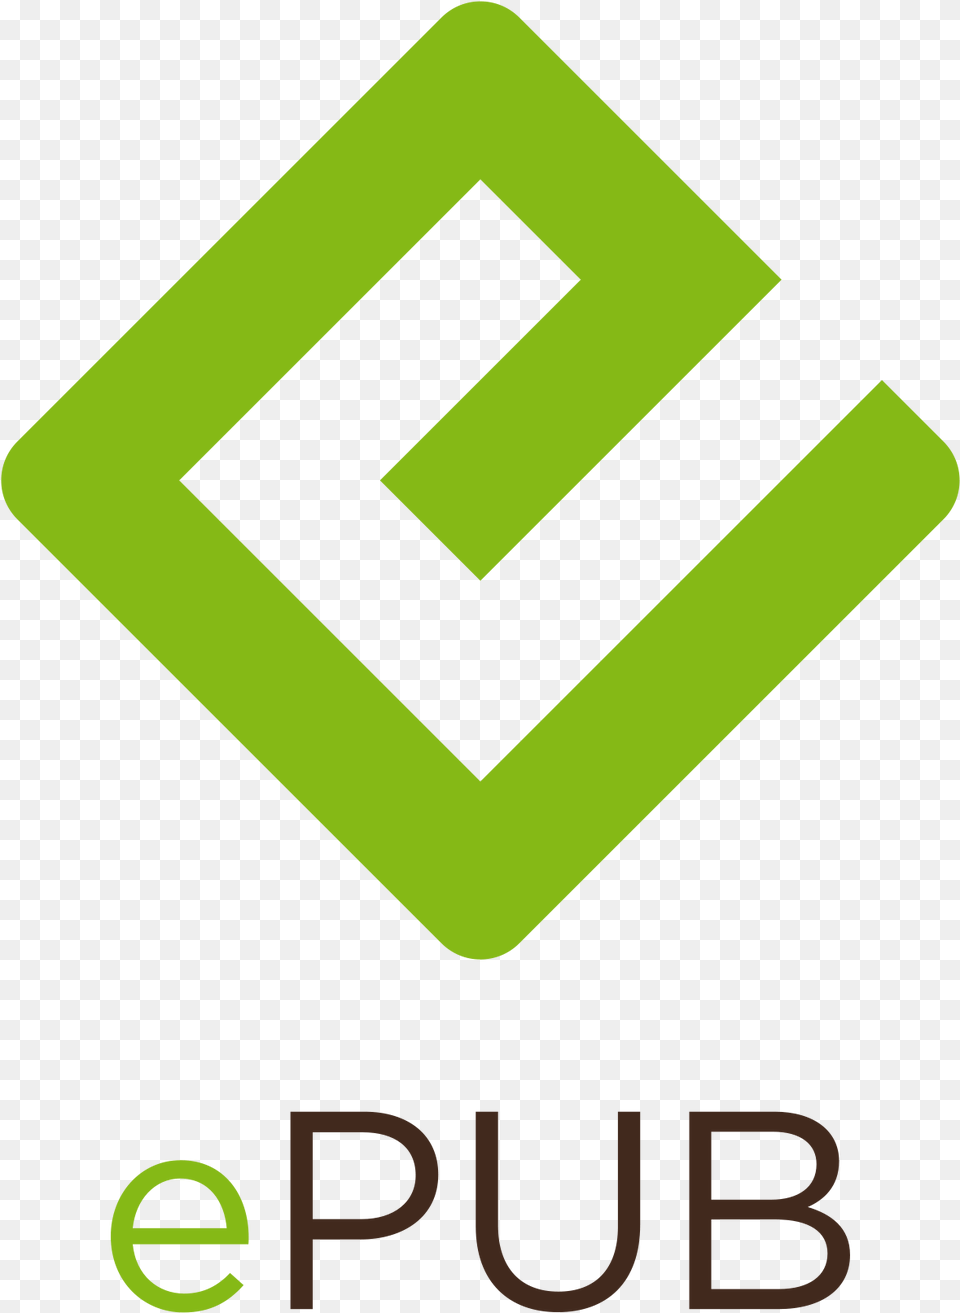 Epub Wikipedia Epub Logo, Symbol Png Image